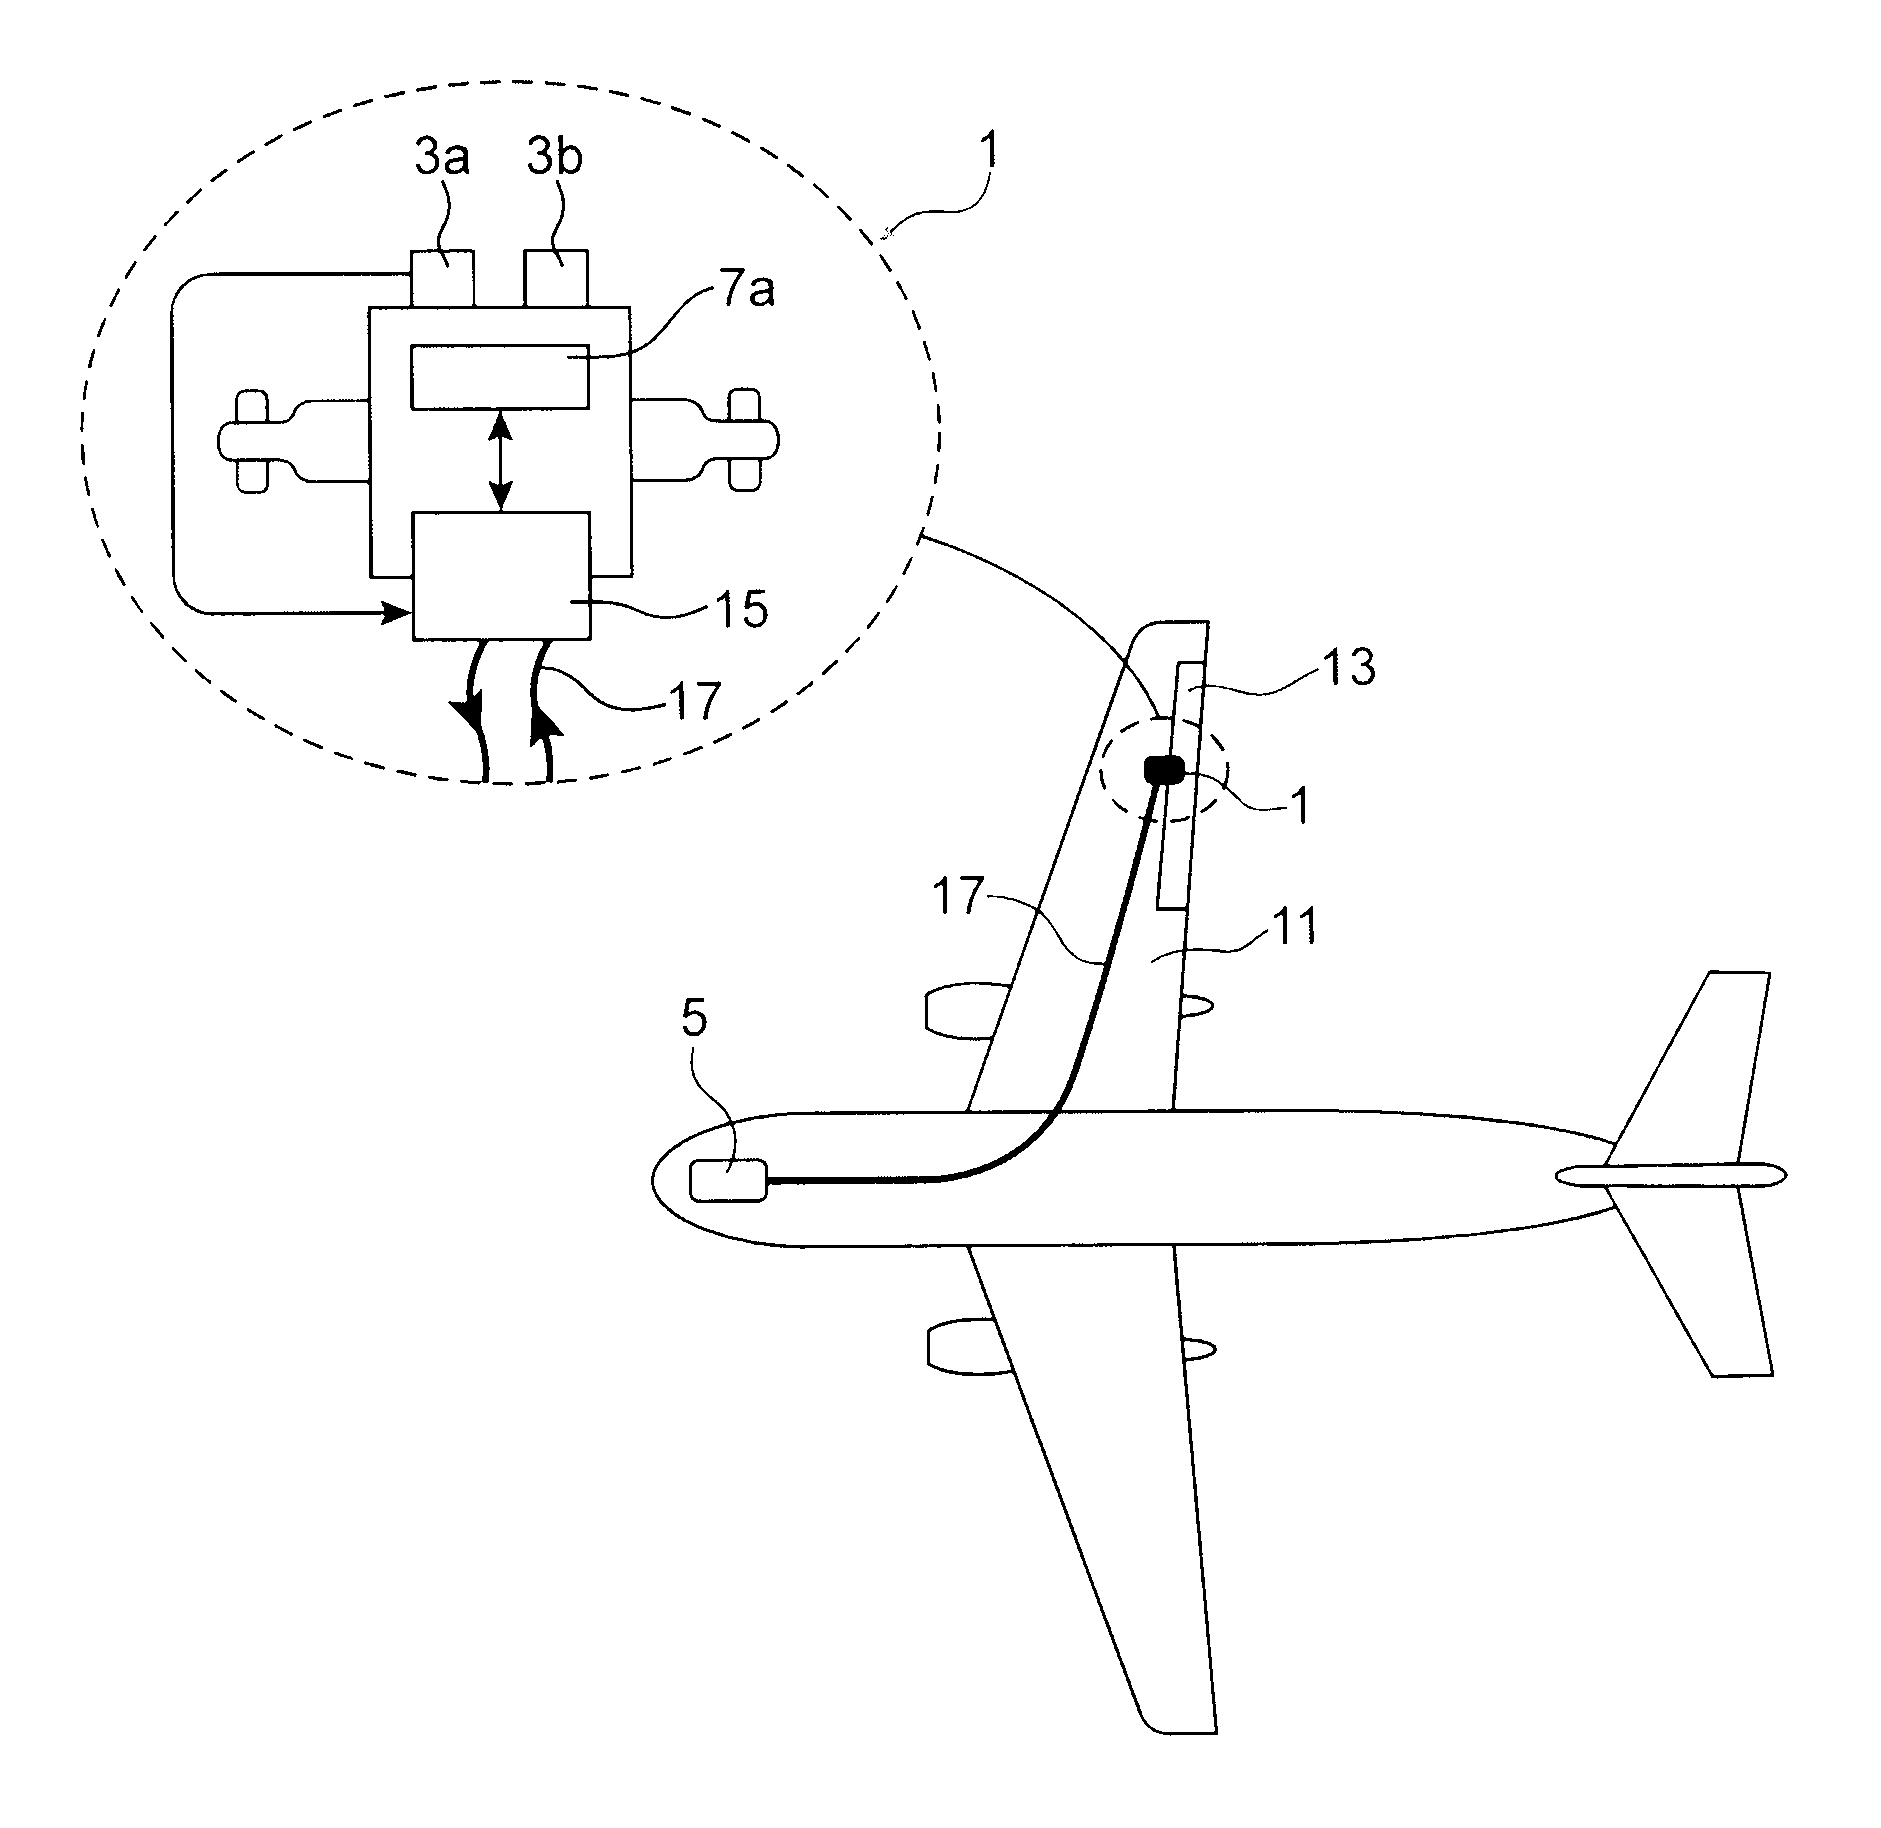 Monitoring of a flight control actuator of an aircraft